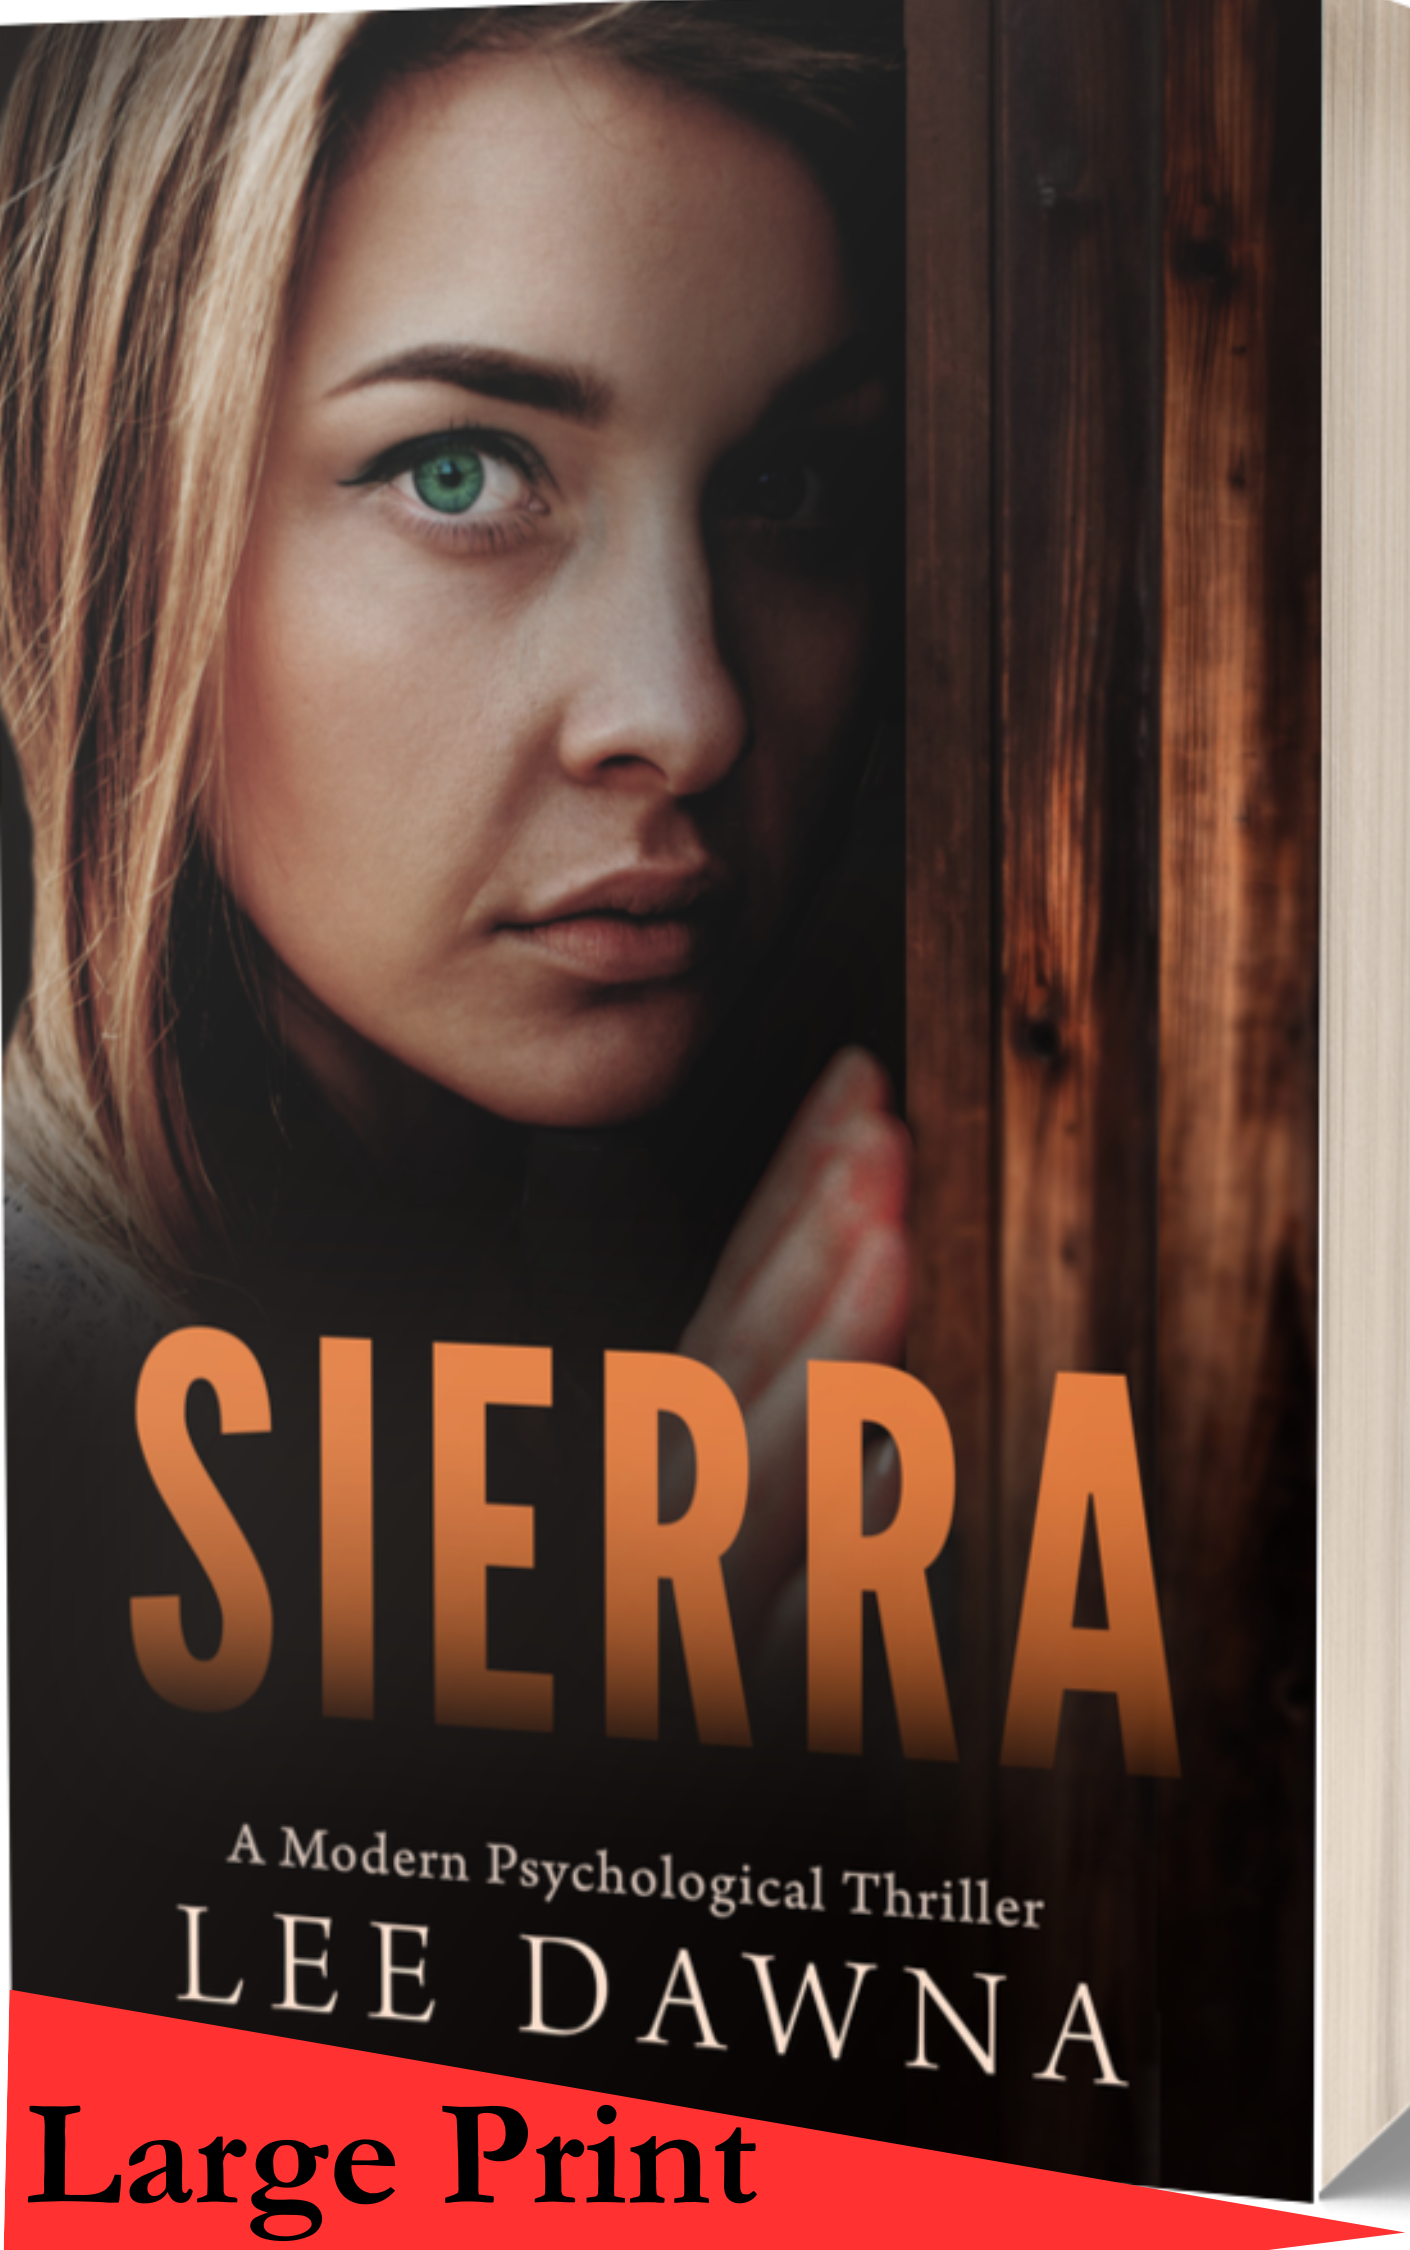 Sierra - A modern psychological thriller